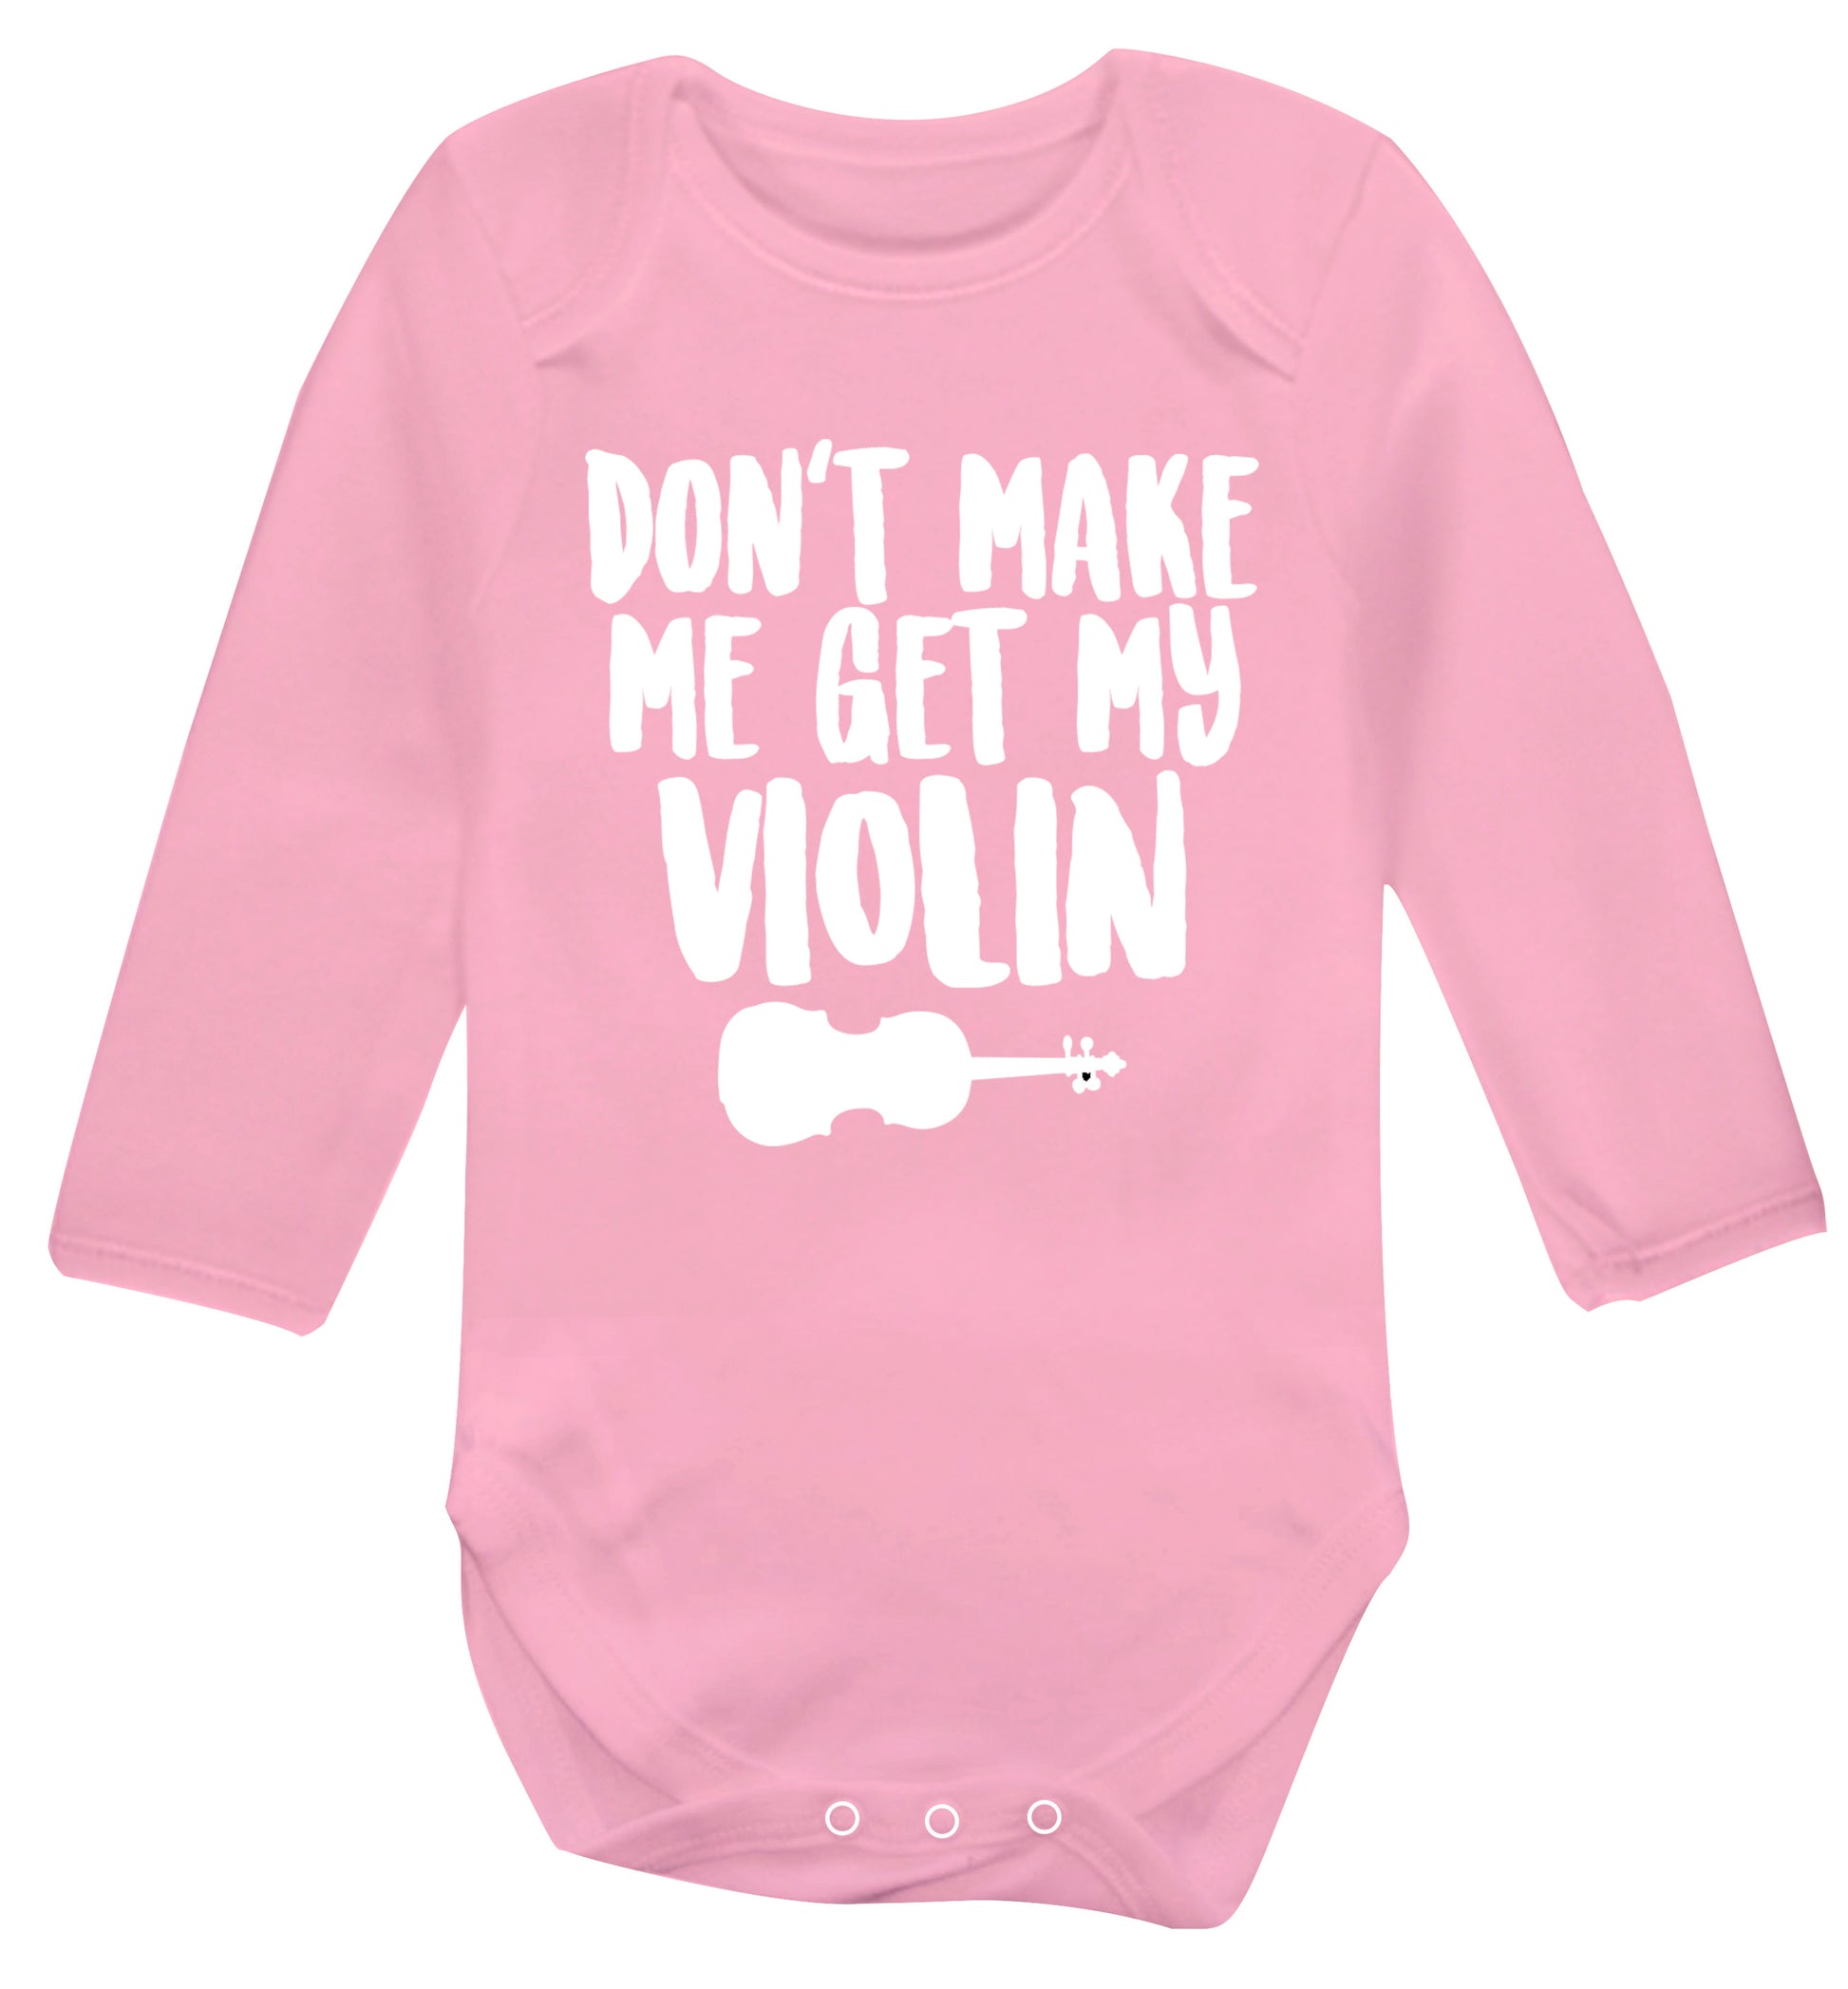 Don't make me get my violin Baby Vest long sleeved pale pink 6-12 months